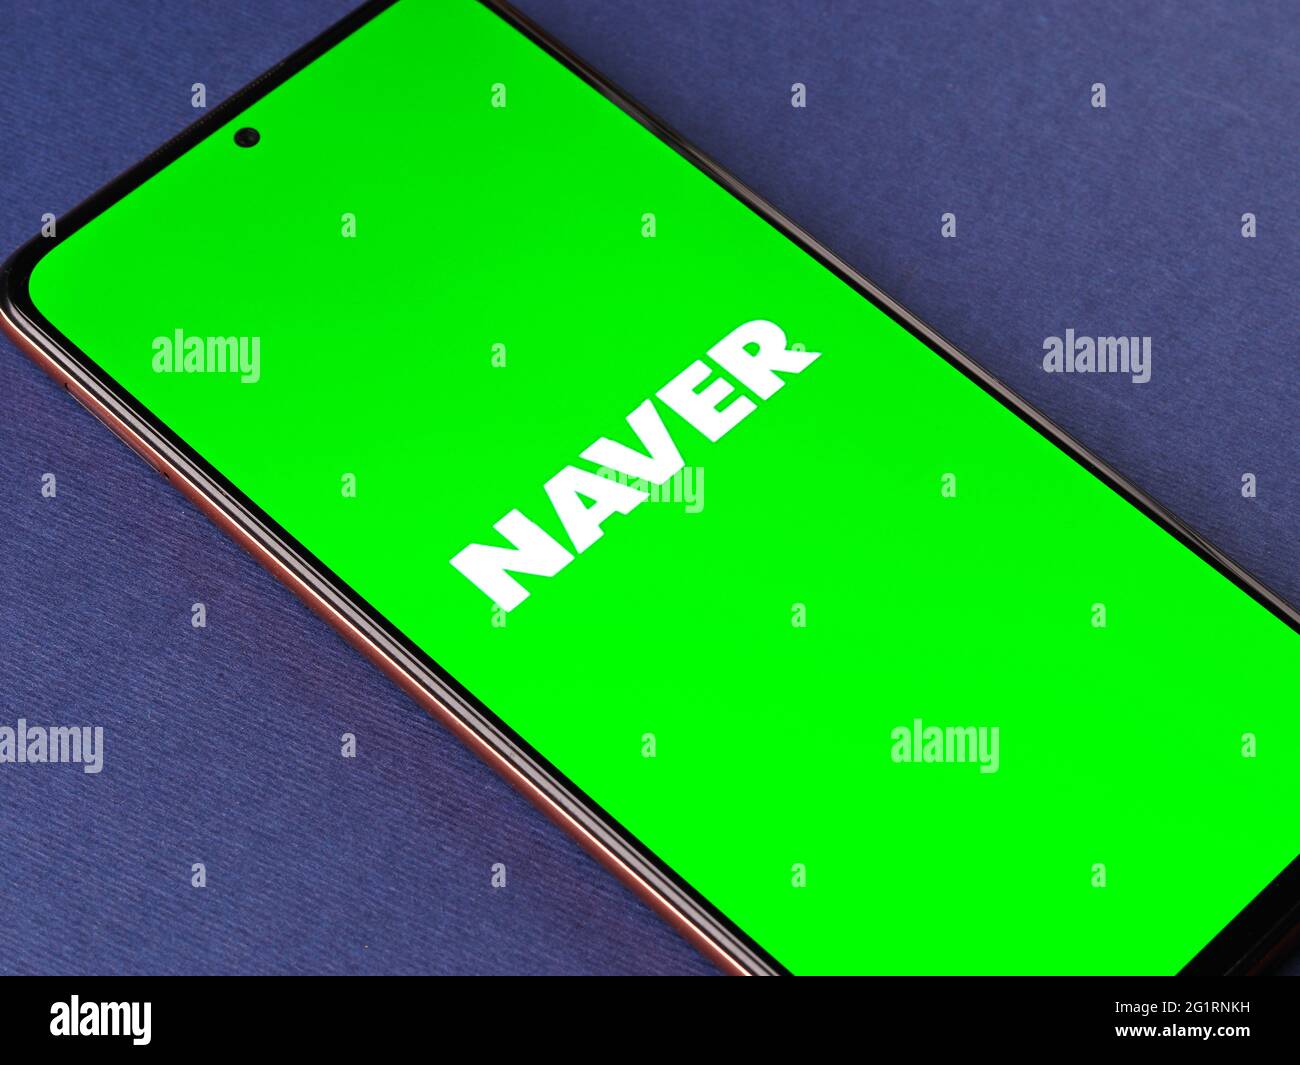 Assam, india - May 29, 2021 : Naver logo on phone screen stock image. Stock Photo